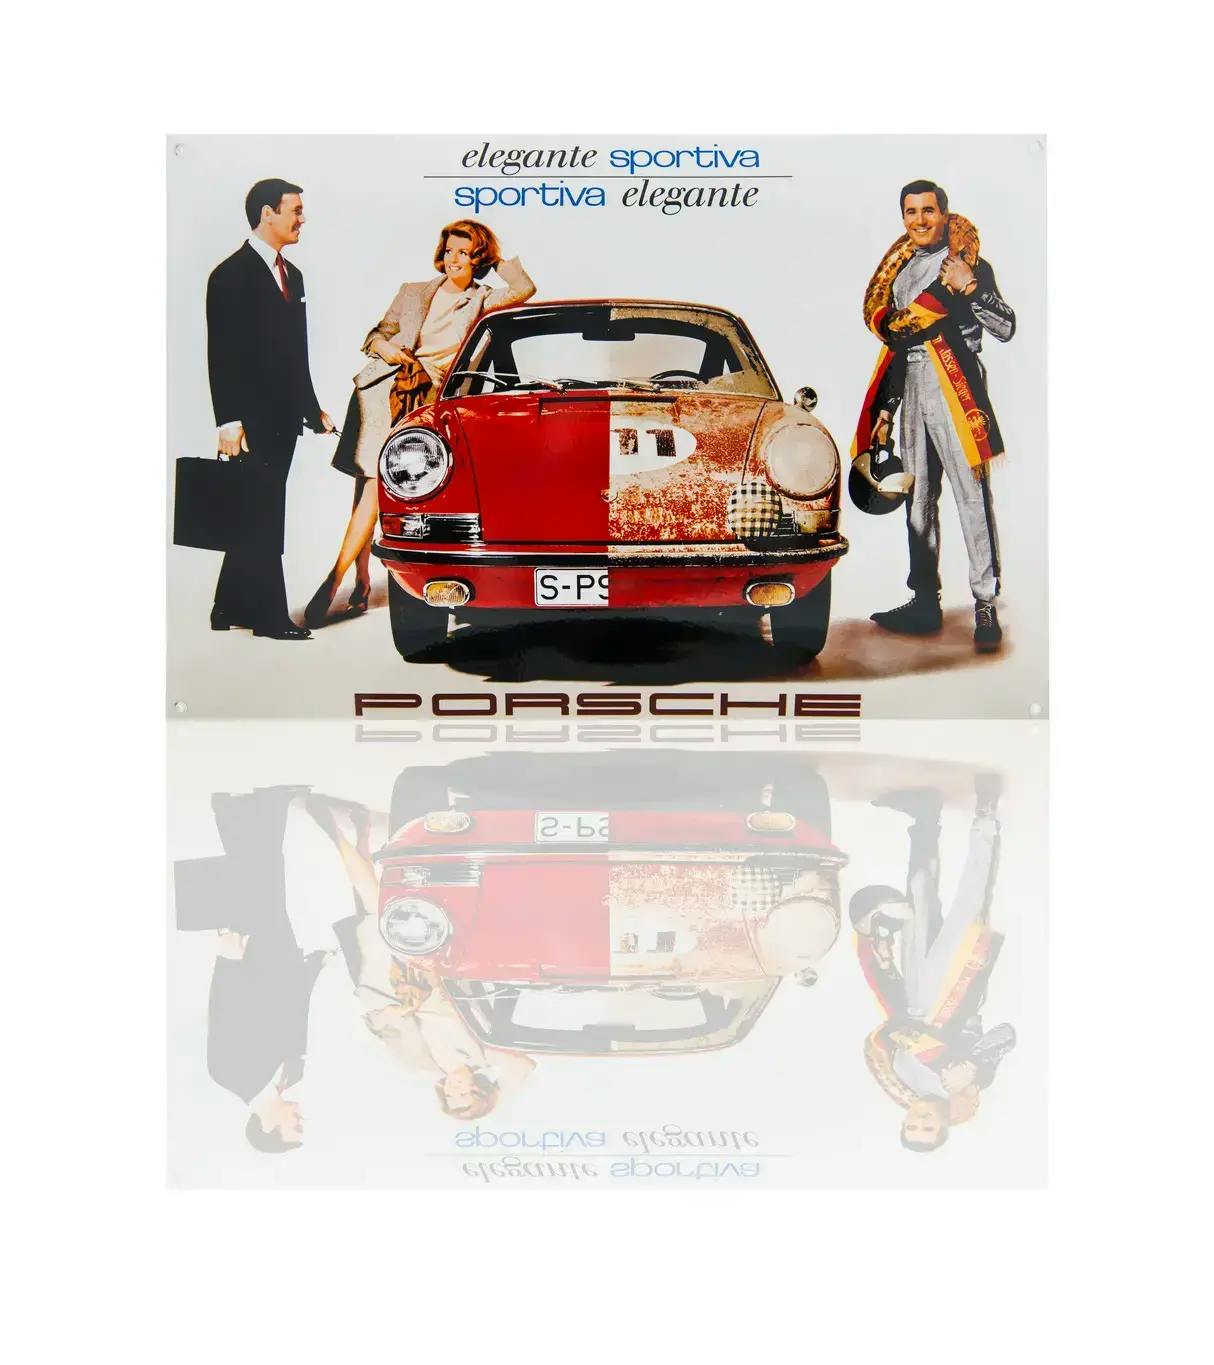 Emailleschild Porsche Classic "elegante sportiva" 1